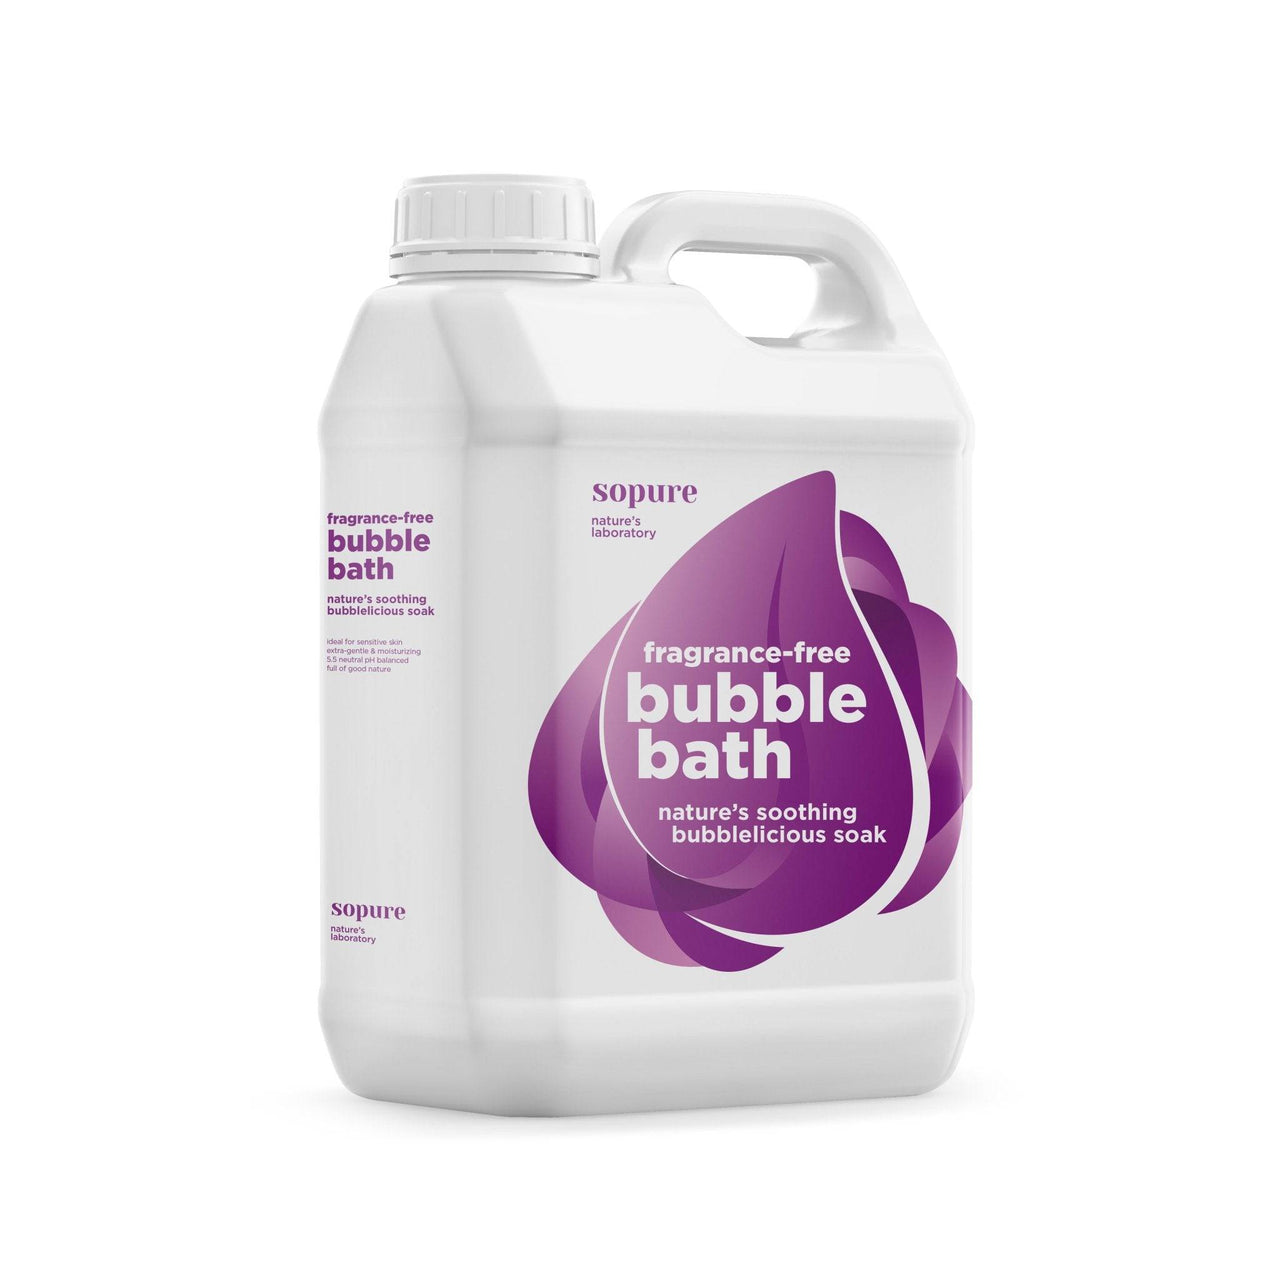 SoPure Fragrance-free Bubble Bath - SoPure Naturally